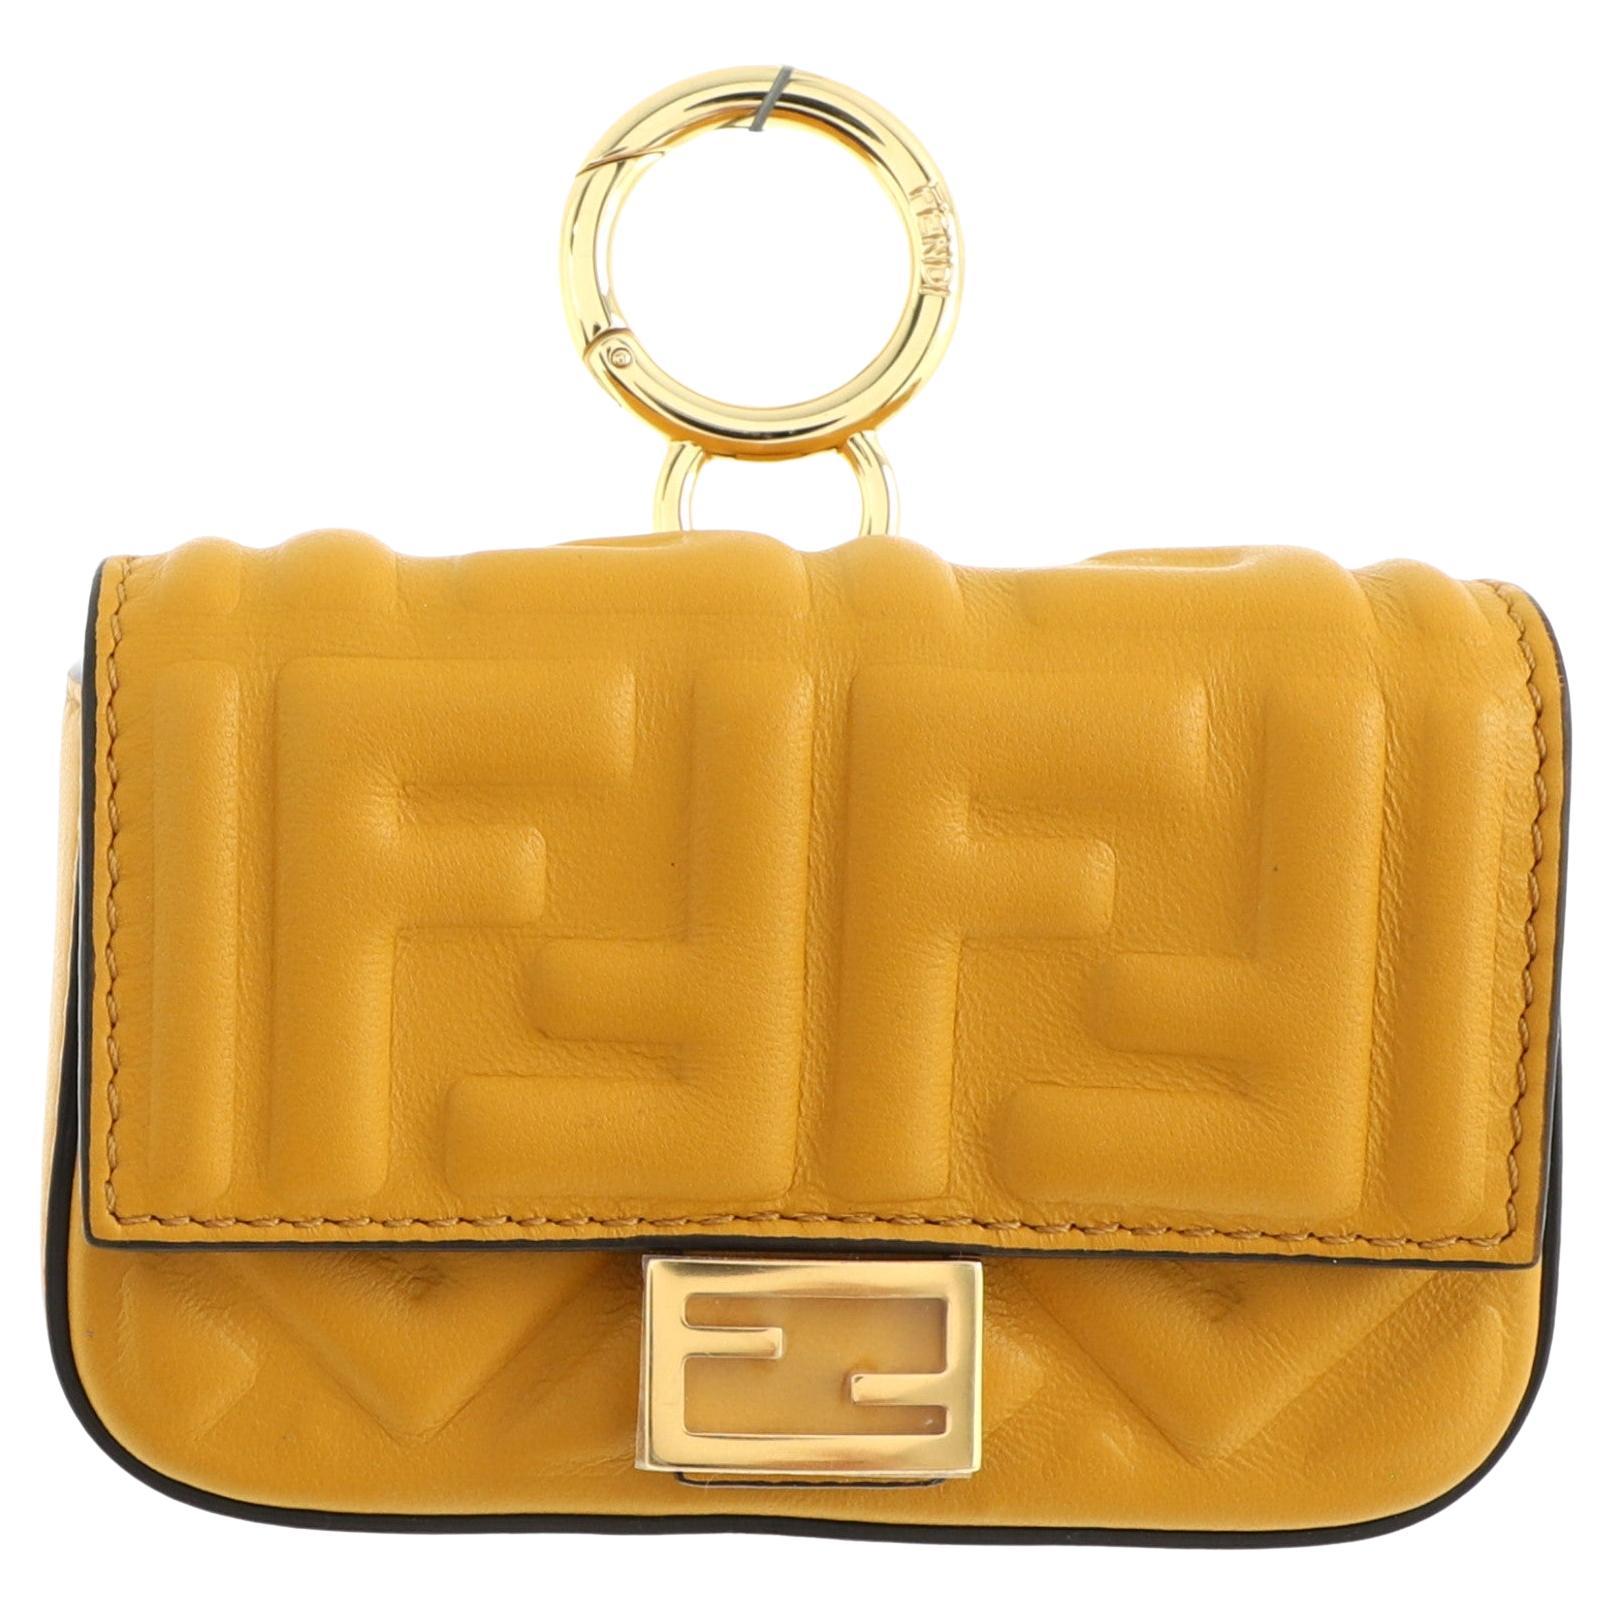 Fendi Charm - 32 For Sale on 1stDibs | fendi bag charm, fendi bag 